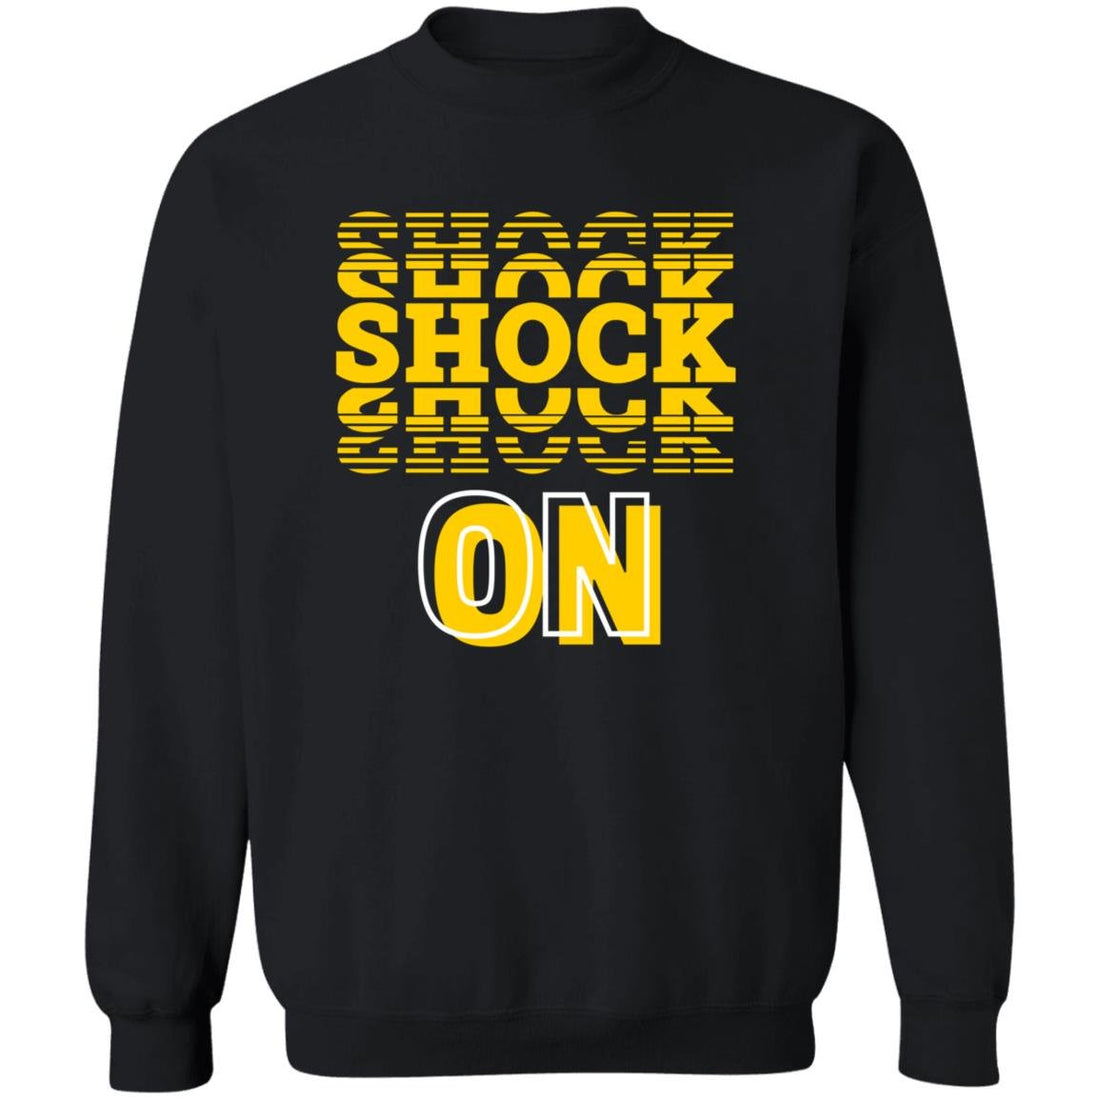 Shocked ON Crewneck Pullover Sweatshirt - Sweatshirts - Positively Sassy - Shocked ON Crewneck Pullover Sweatshirt